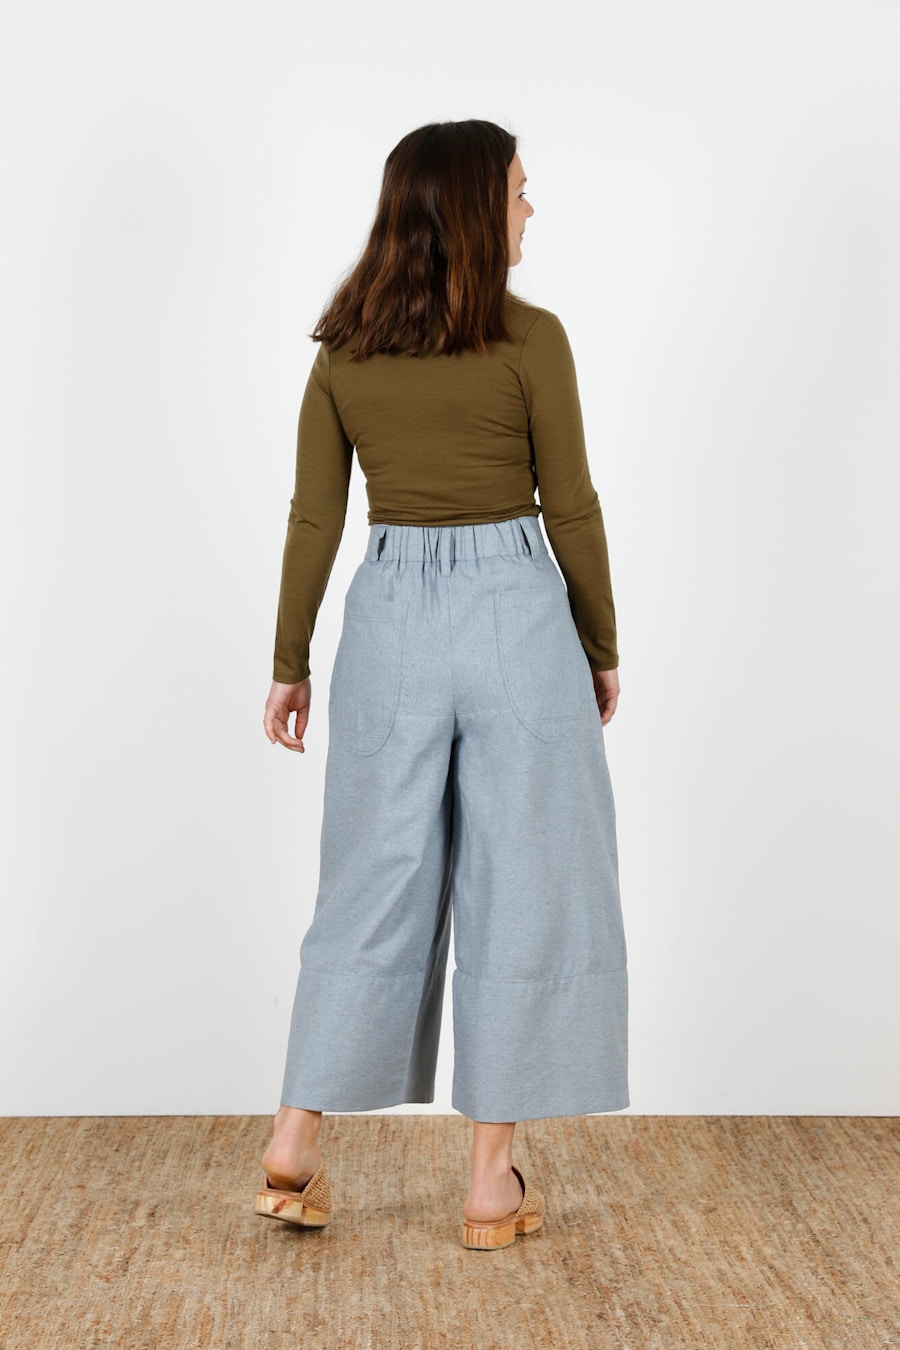 Back Upcycled Cotton Twill Birgitta Helmersson Block Pants The Fabric Store Blog